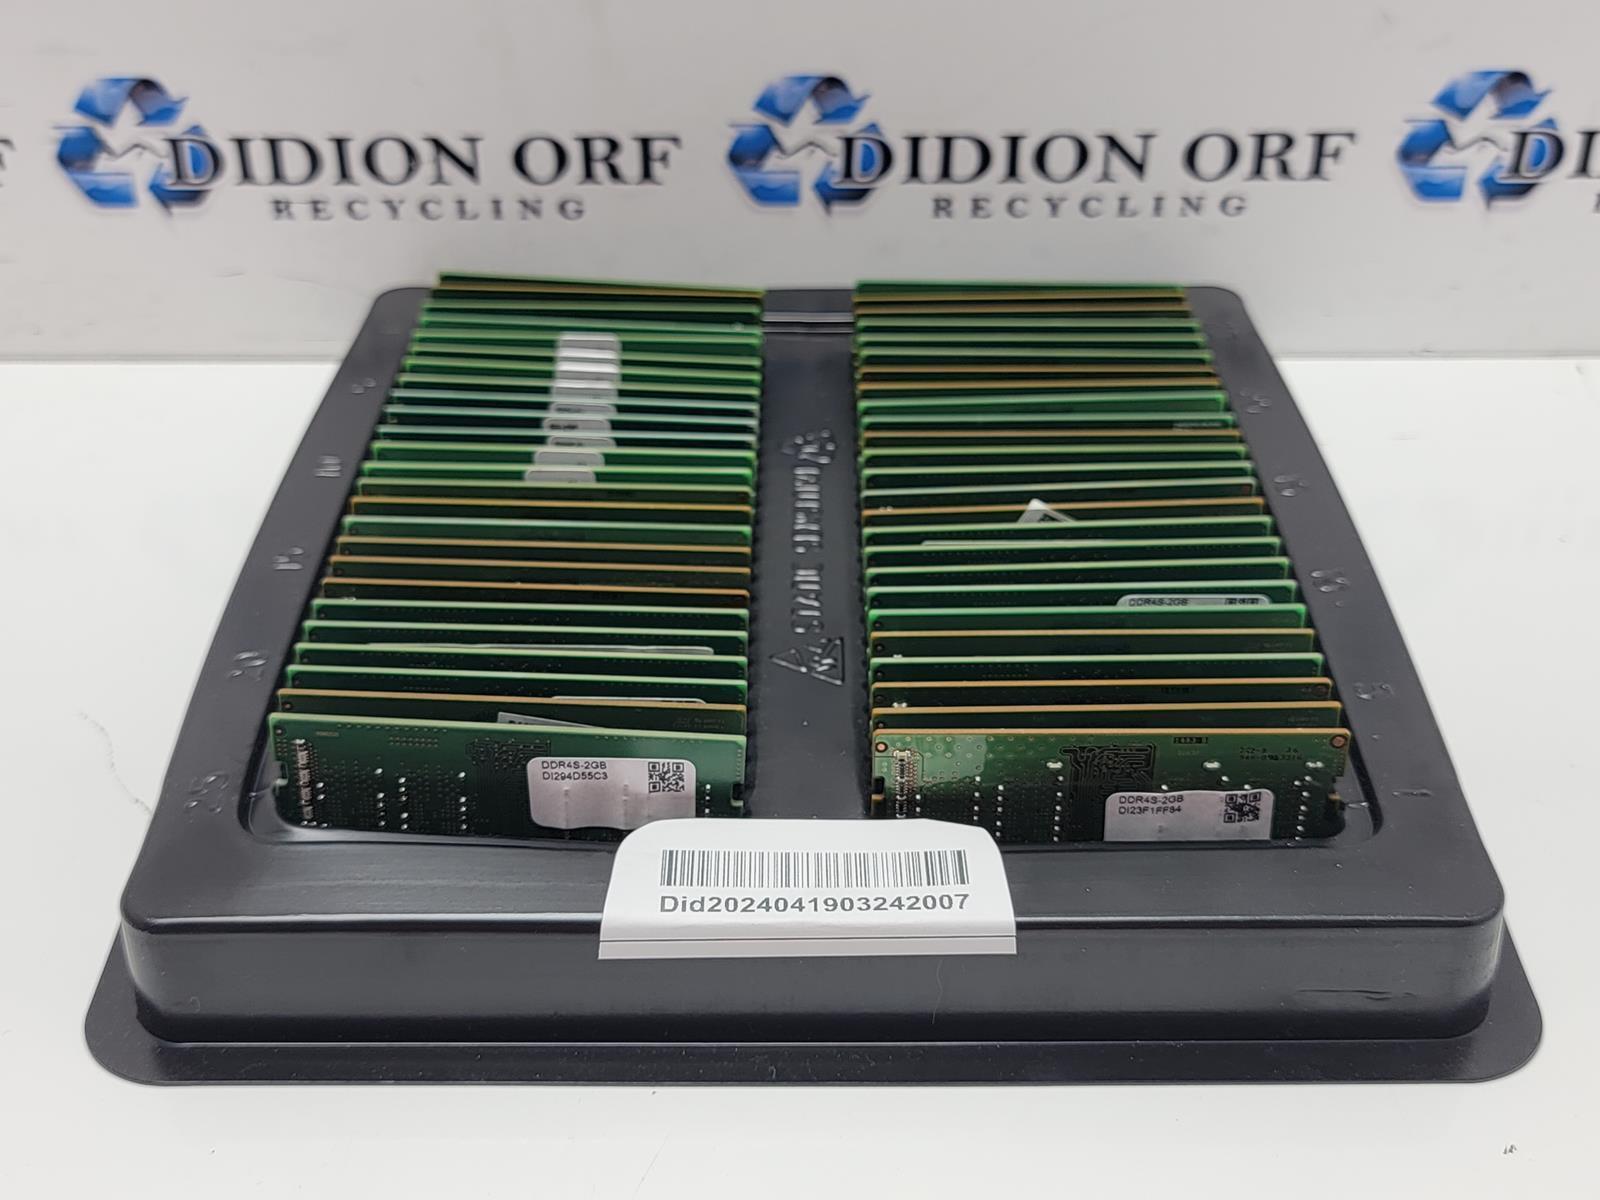 Lot of 50 2gb DDR4S SODIMM Memory Mixed Brand/Model/Speed SKU 8318